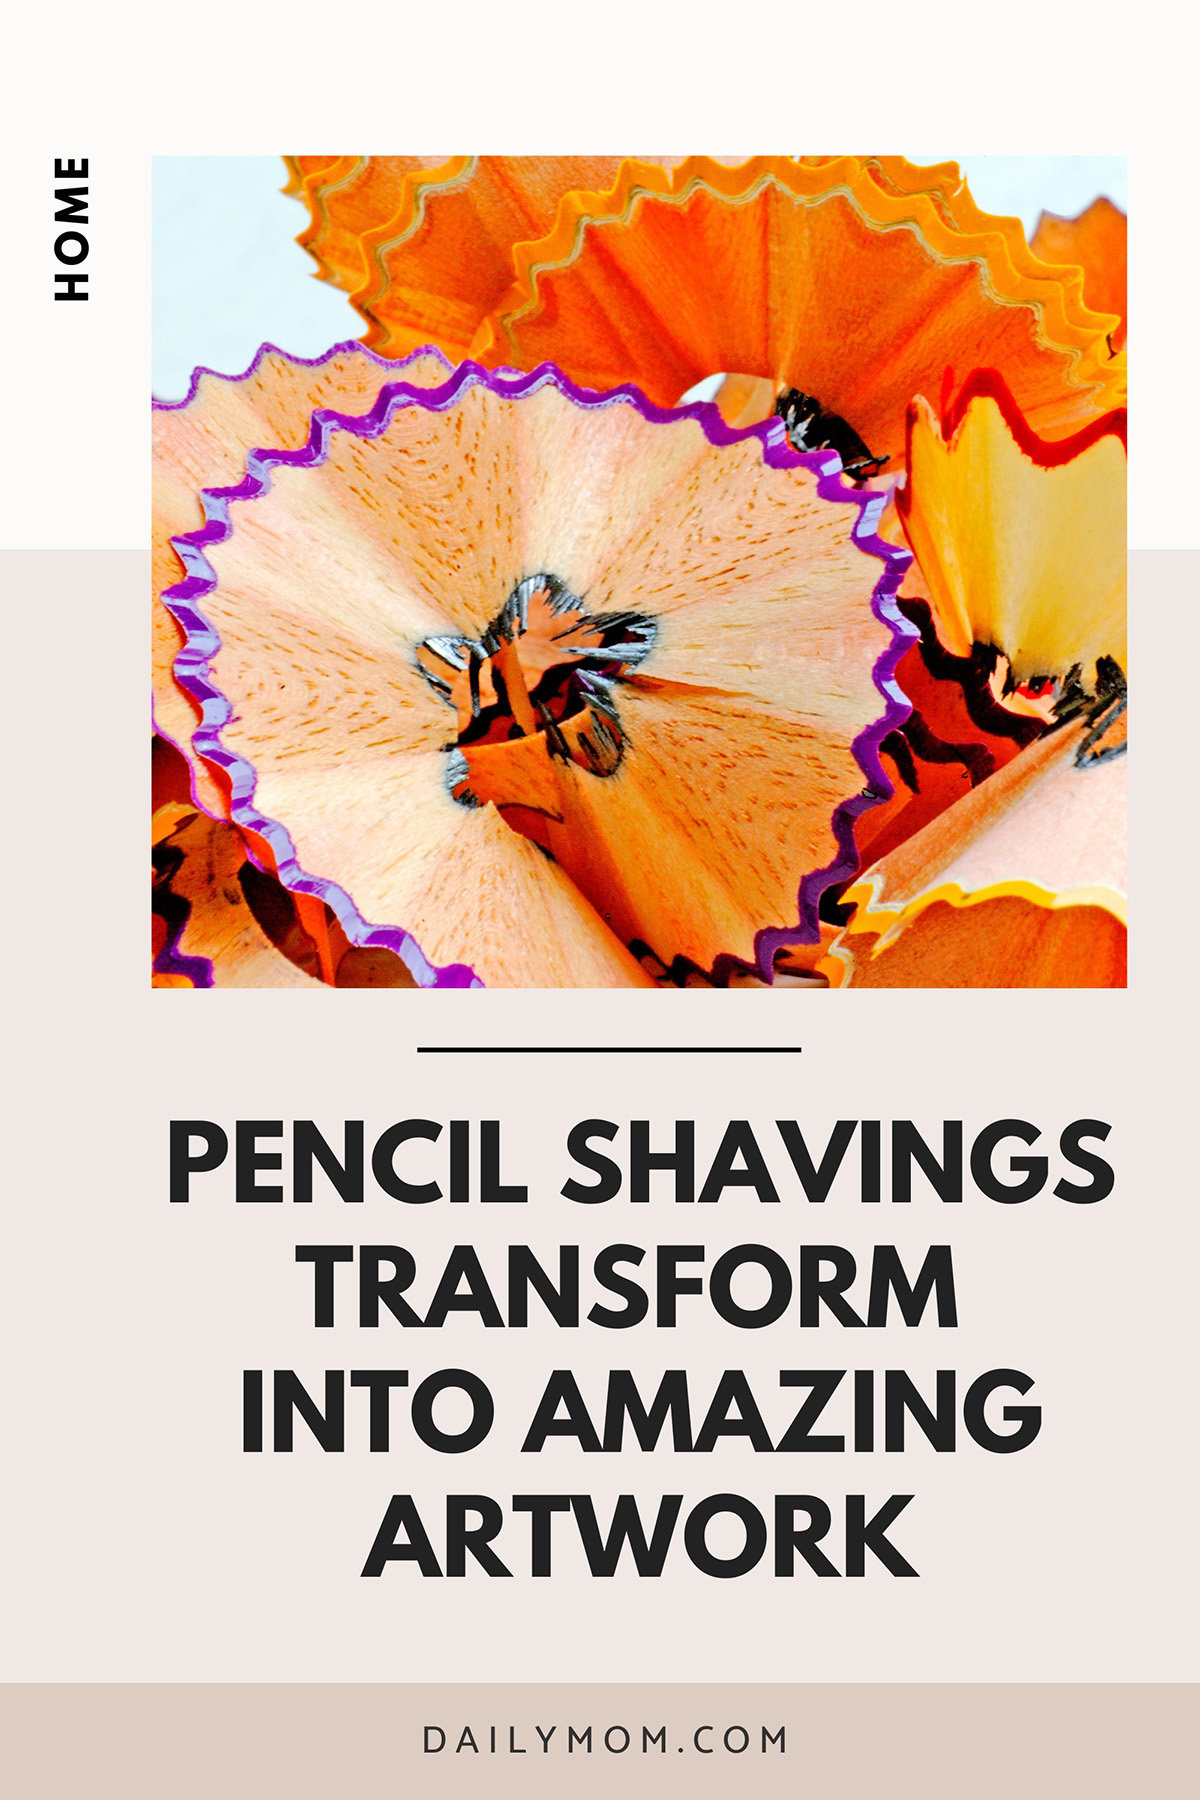 How To Transform Pencil Shavings Into Amazing Artwork